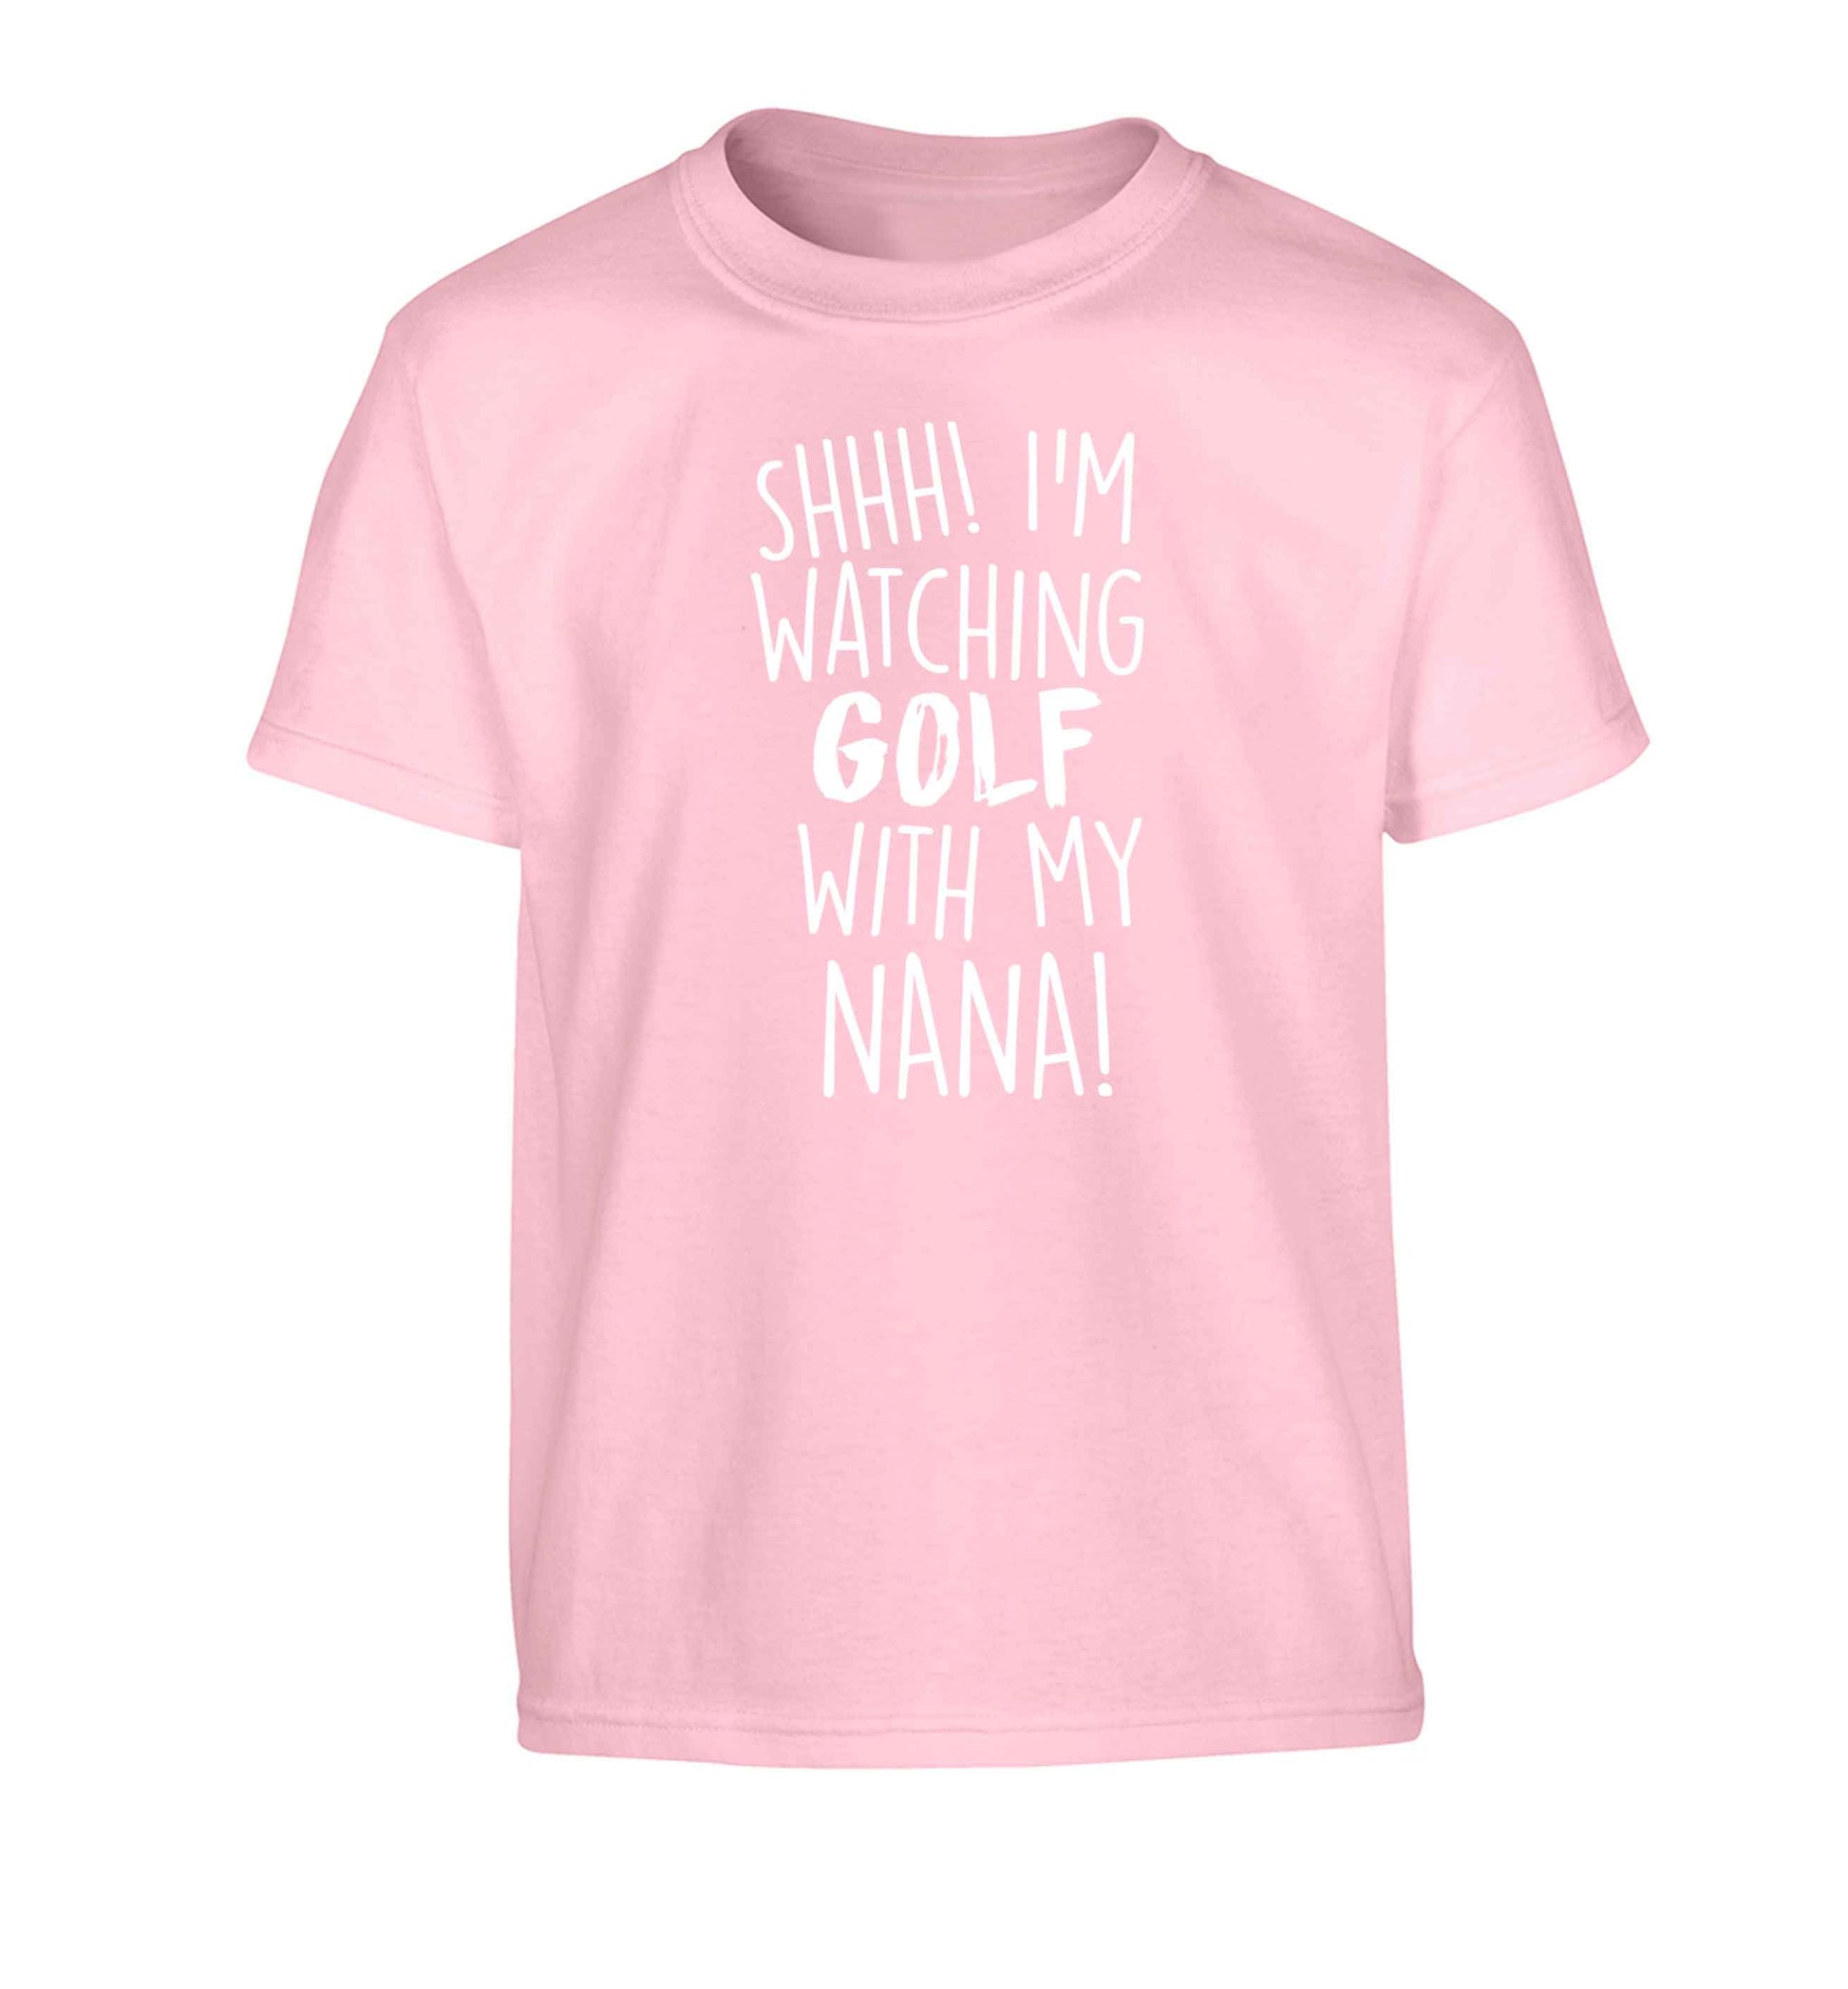 Shh I'm watching golf with my nana Children's light pink Tshirt 12-13 Years